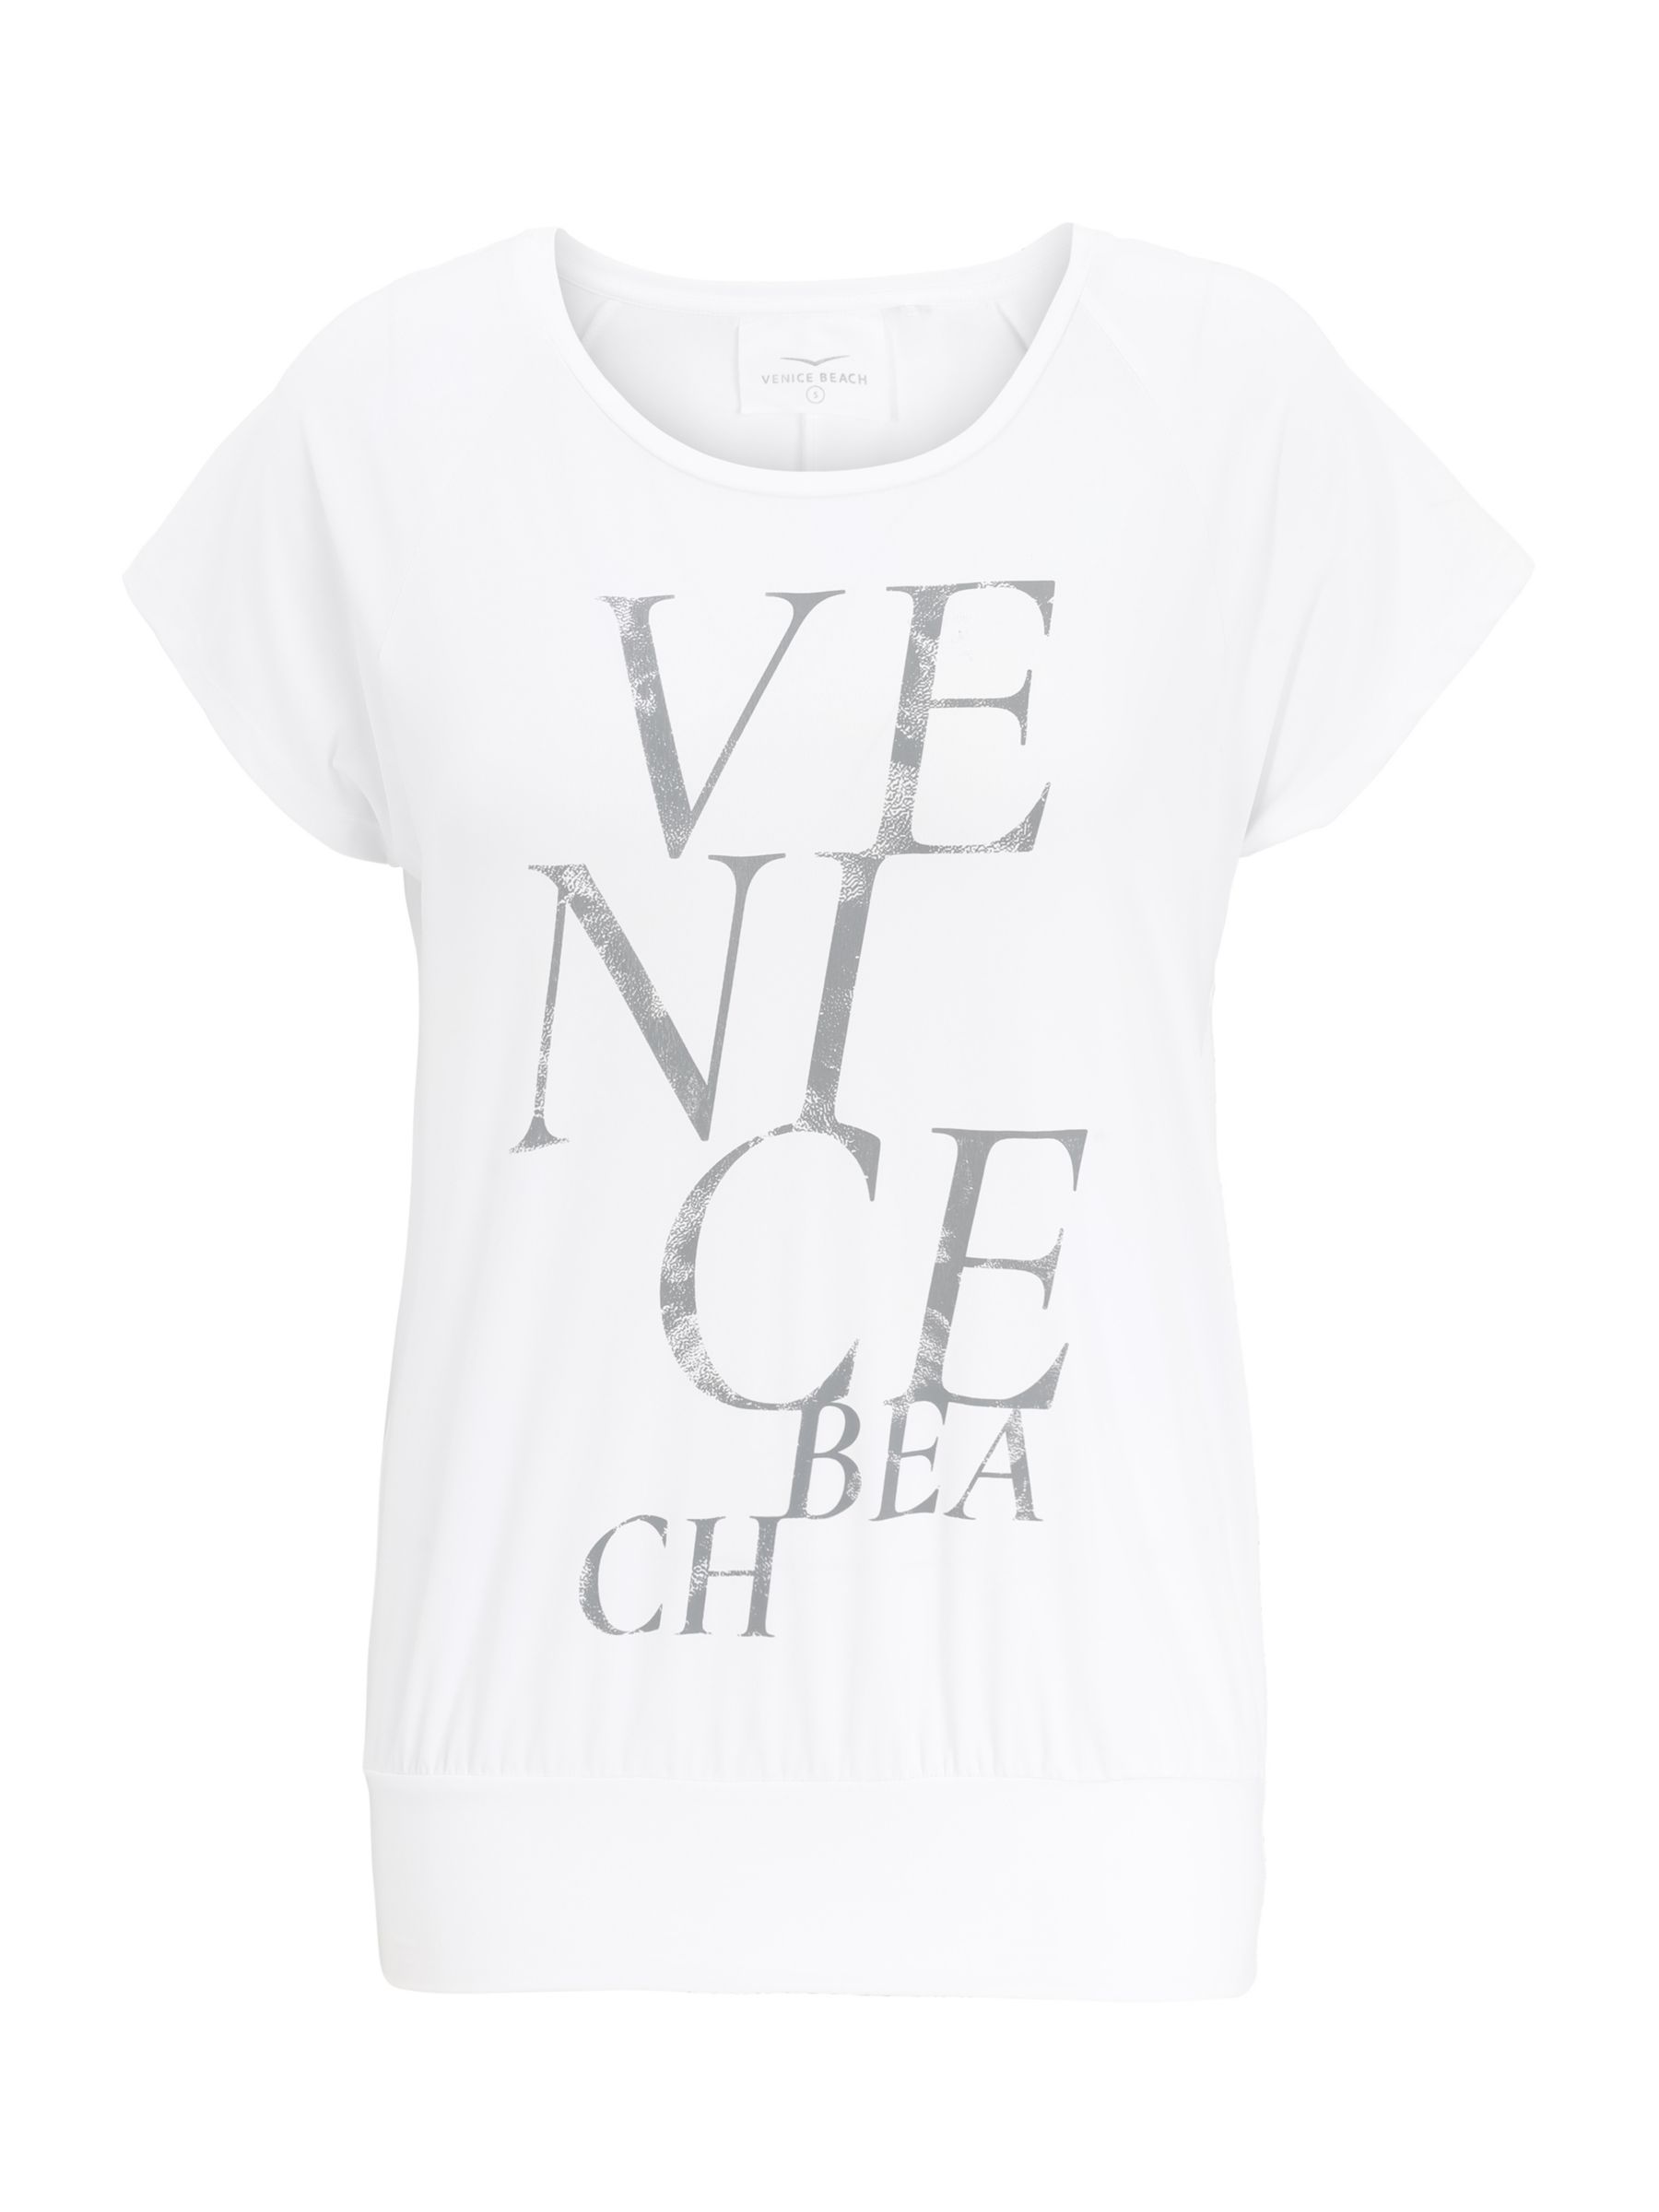 Venice Beach Nobel T-Shirt, White at John Lewis & Partners